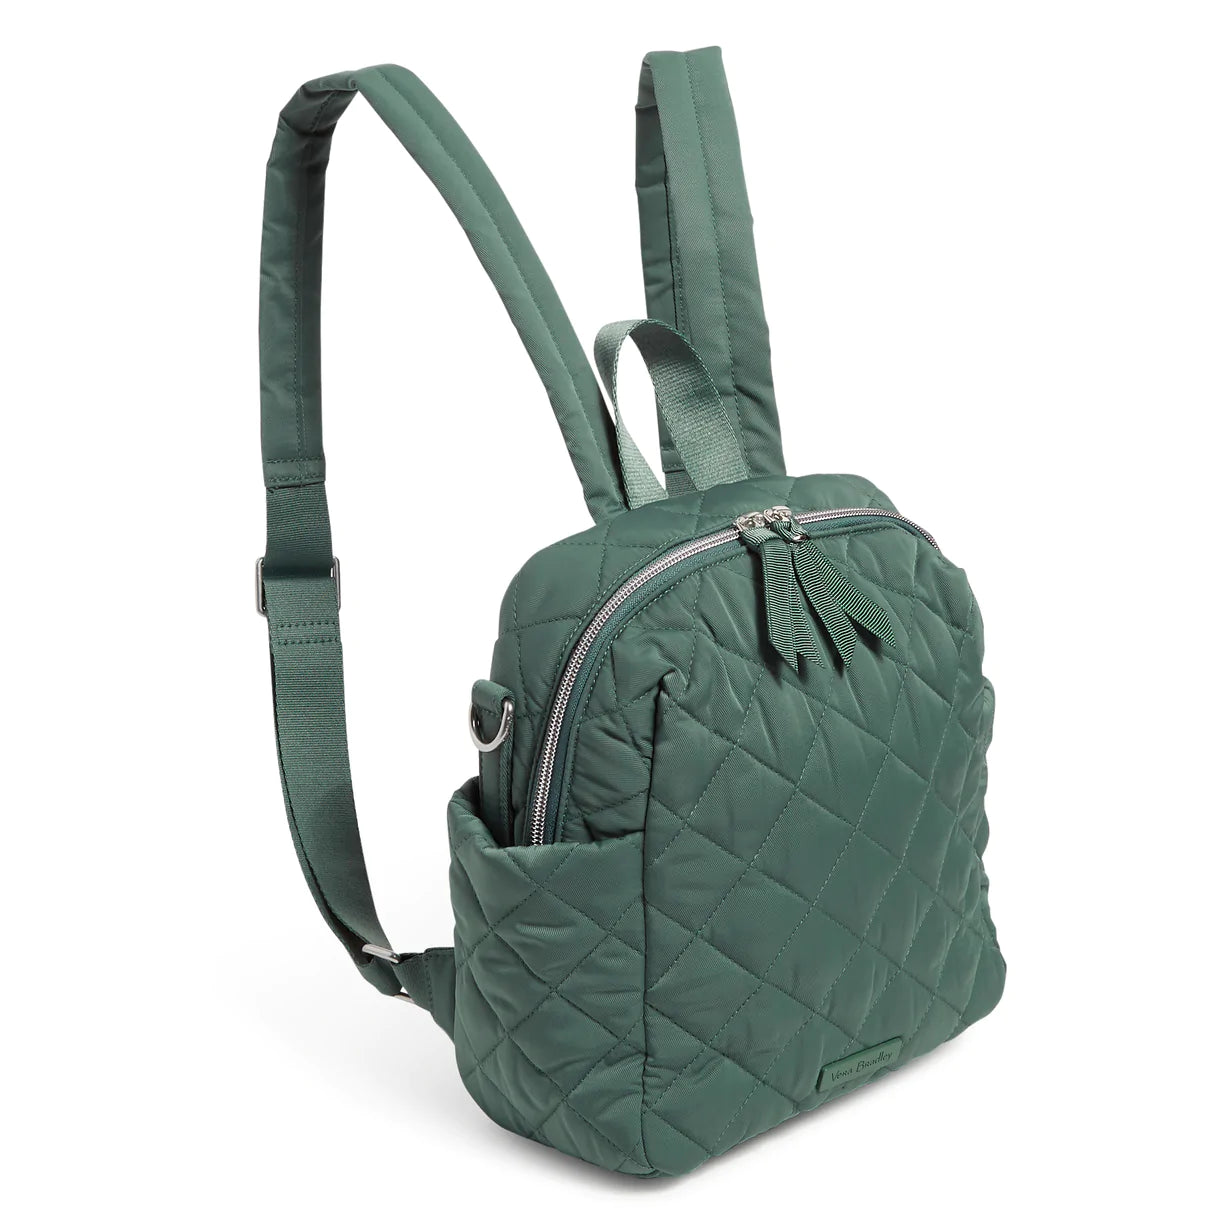 Moda Luxe, Bags, New Womens Moda Luxe Brette Convertible Backpack